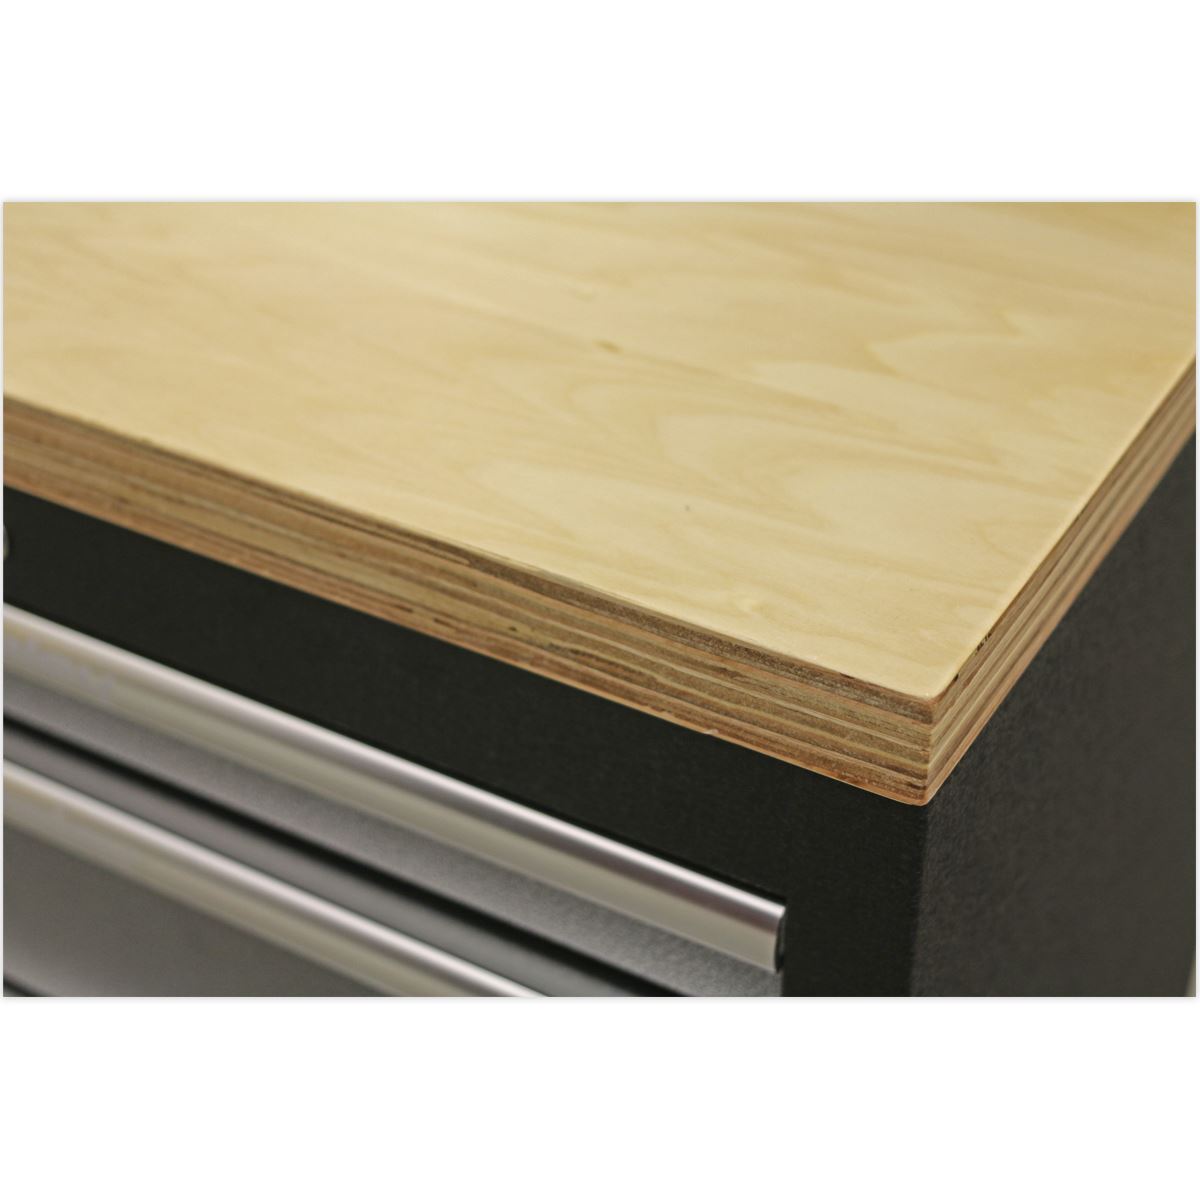 Sealey Superline Pro Pressed Wood Worktop 2040mm